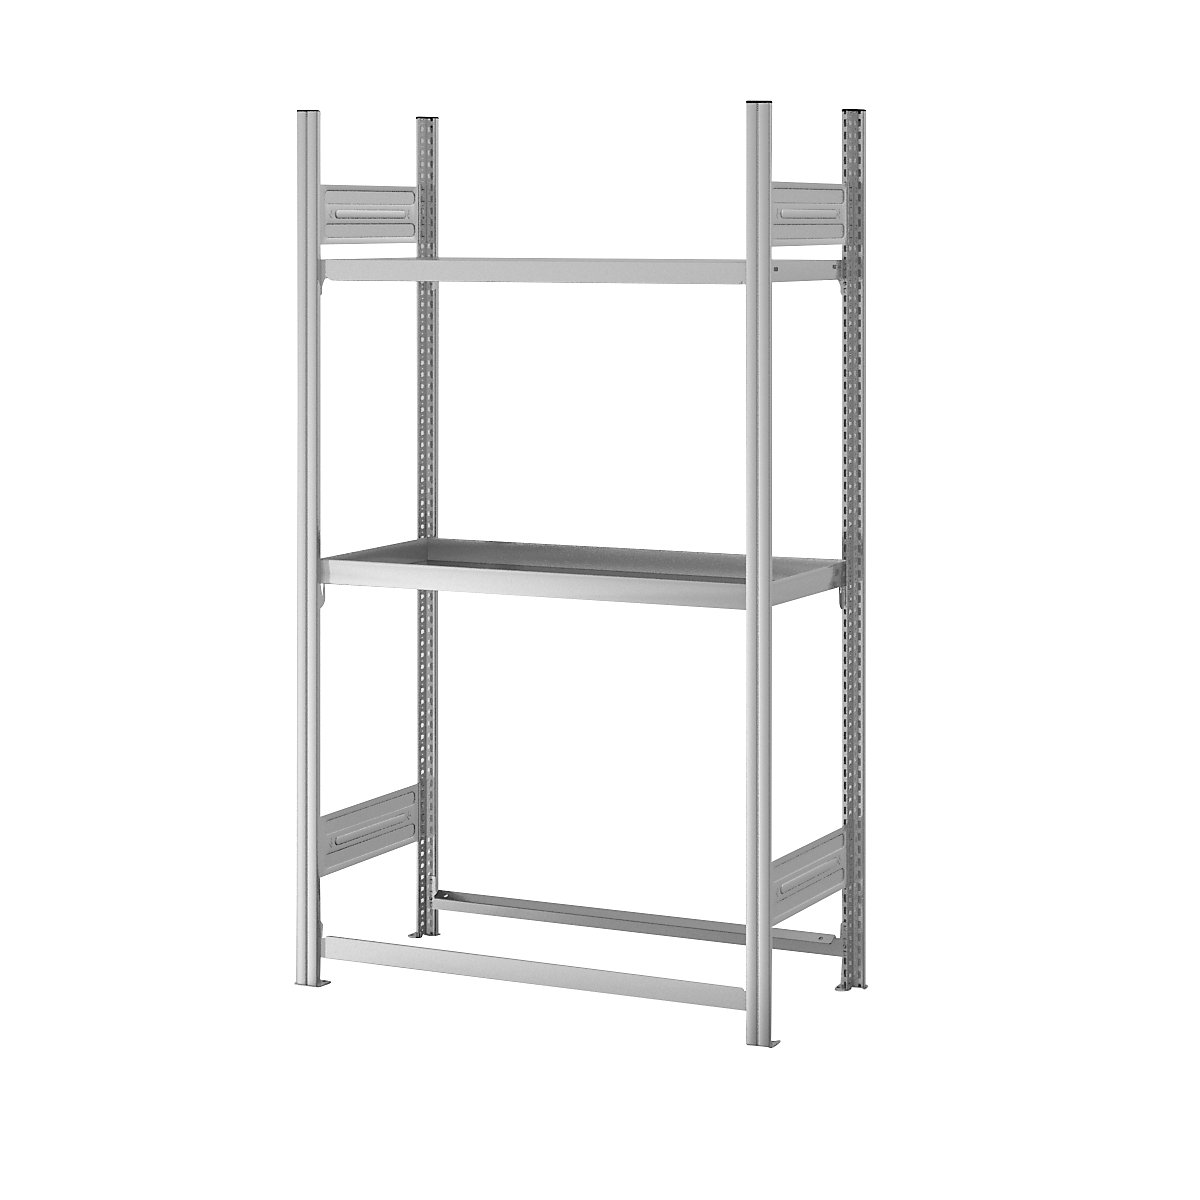 Warehouse and workshop multifunction shelf unit – hofe, height 1750 mm, 3 storage levels, standard shelf unit, WxD 1060 x 435 mm-2